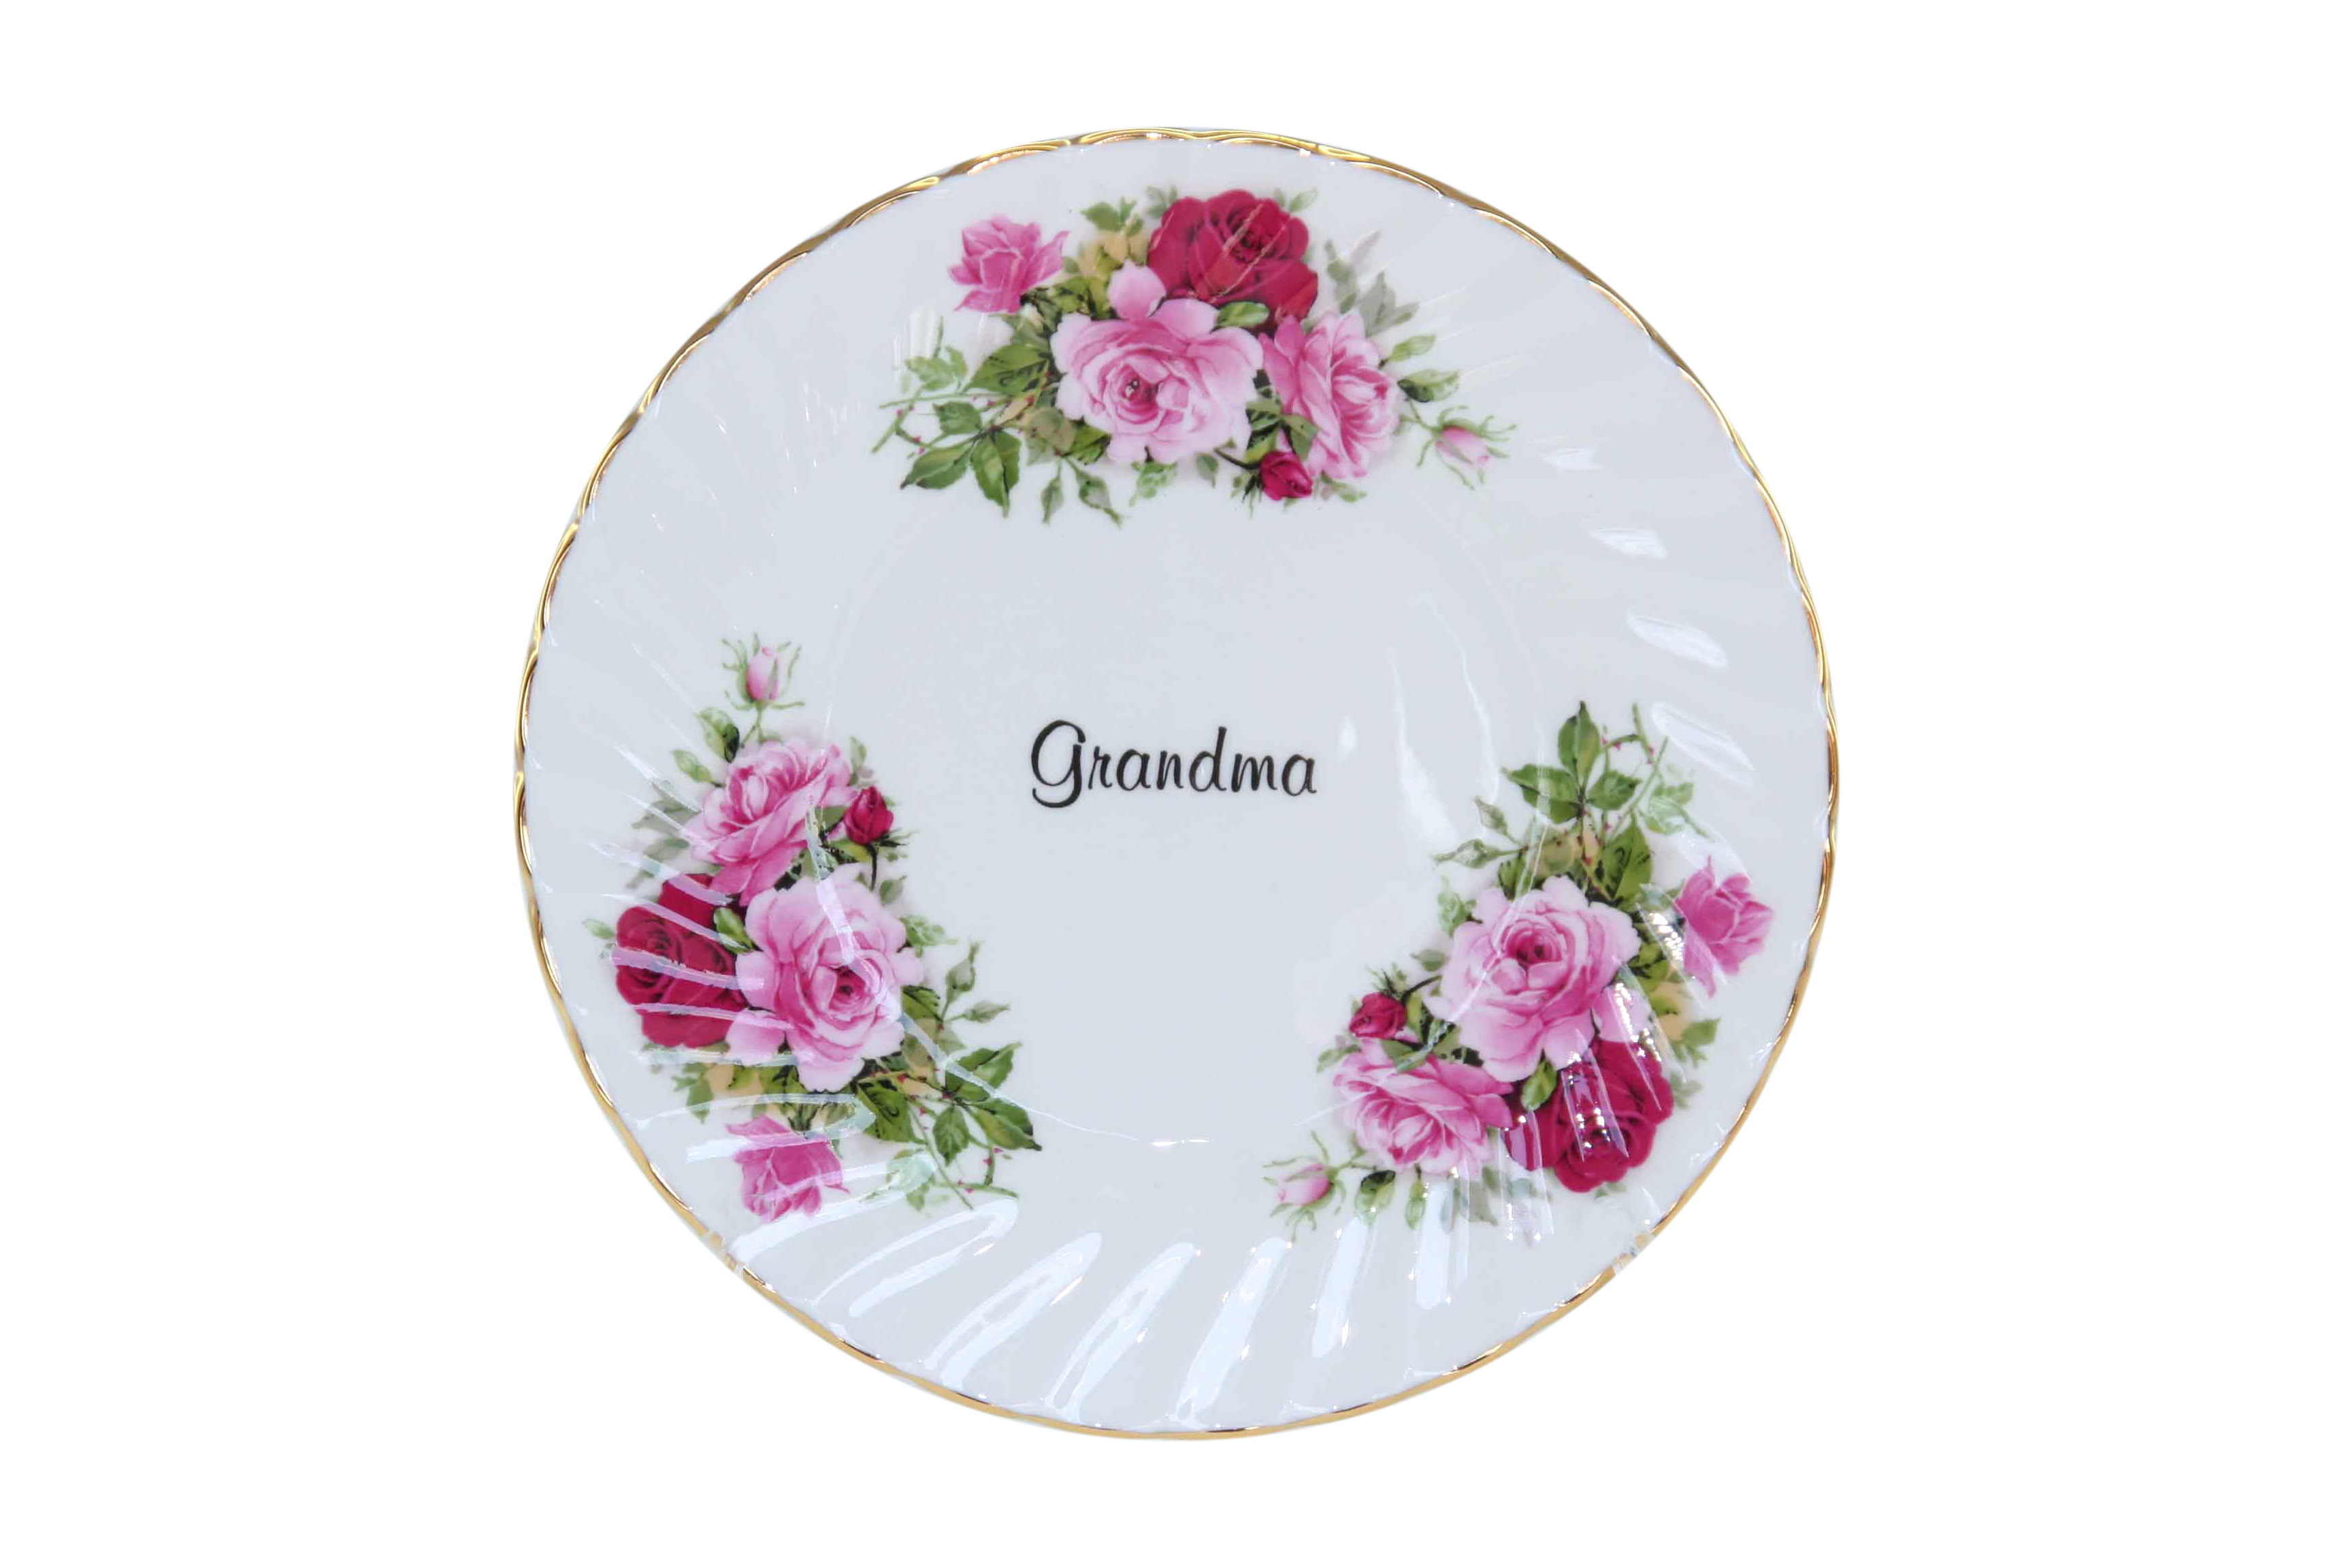 Grandma Cake/Display Plate